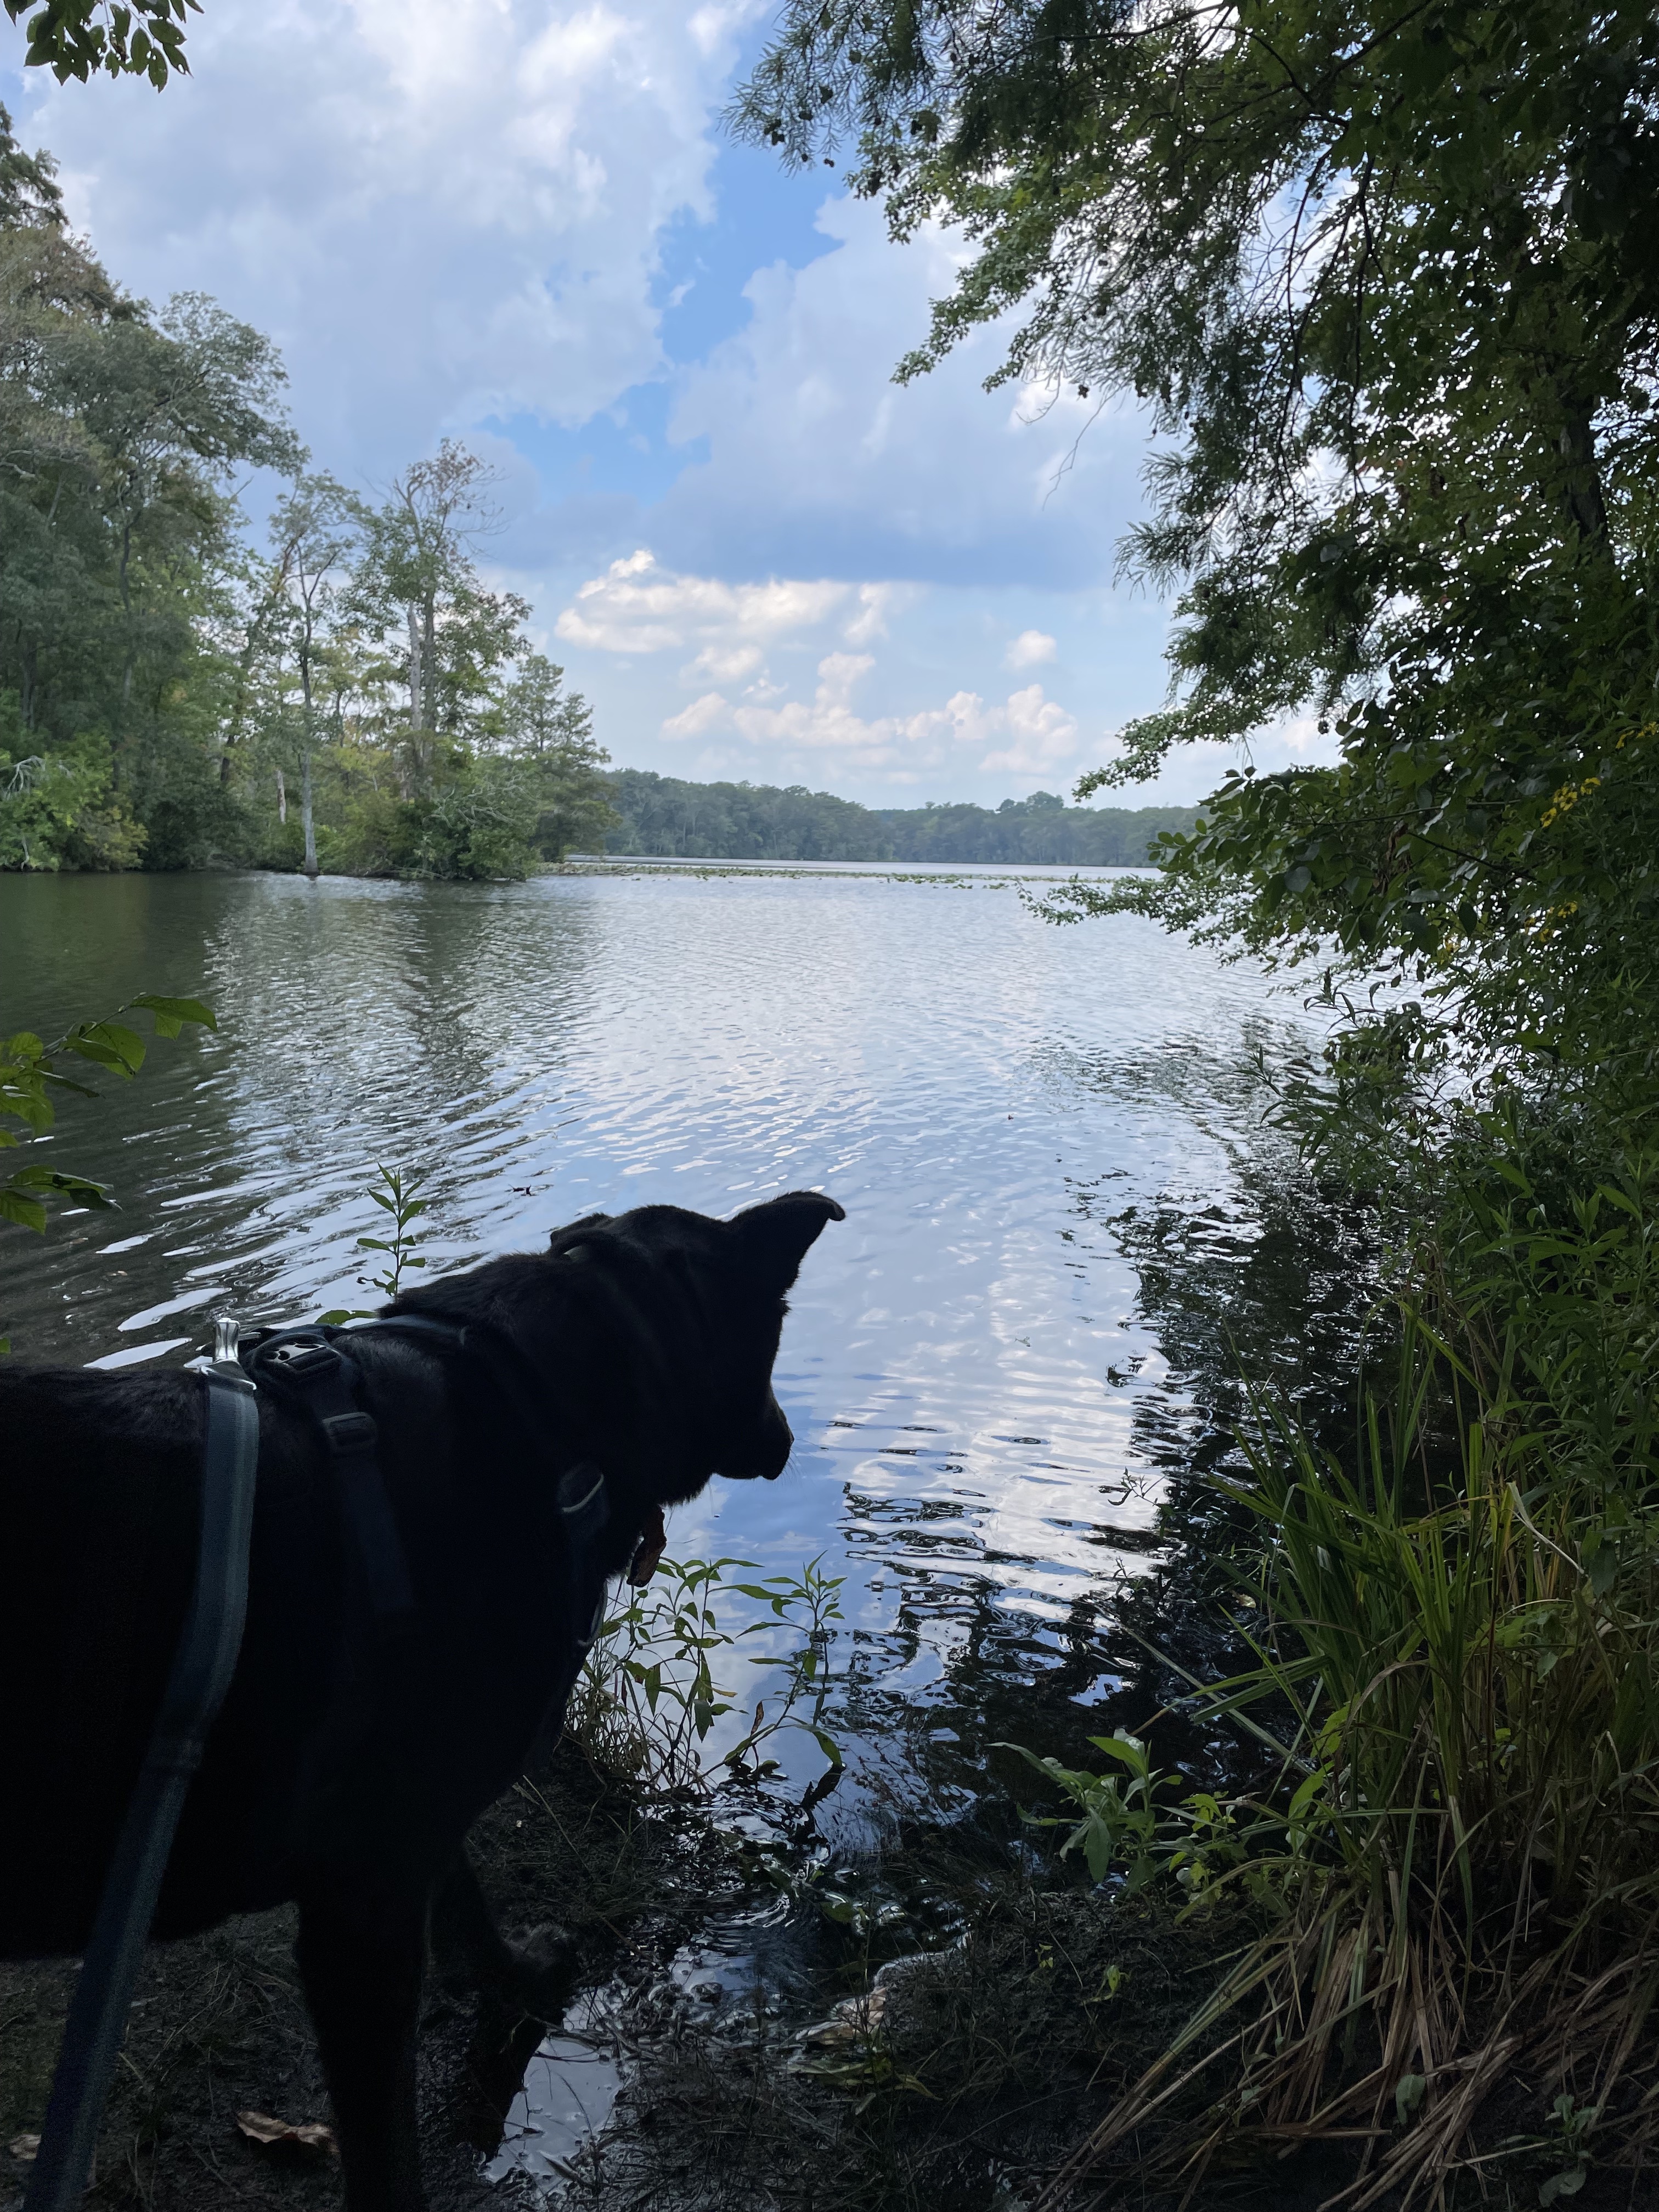 Black dog overlooking river in Pocomoke River State Park